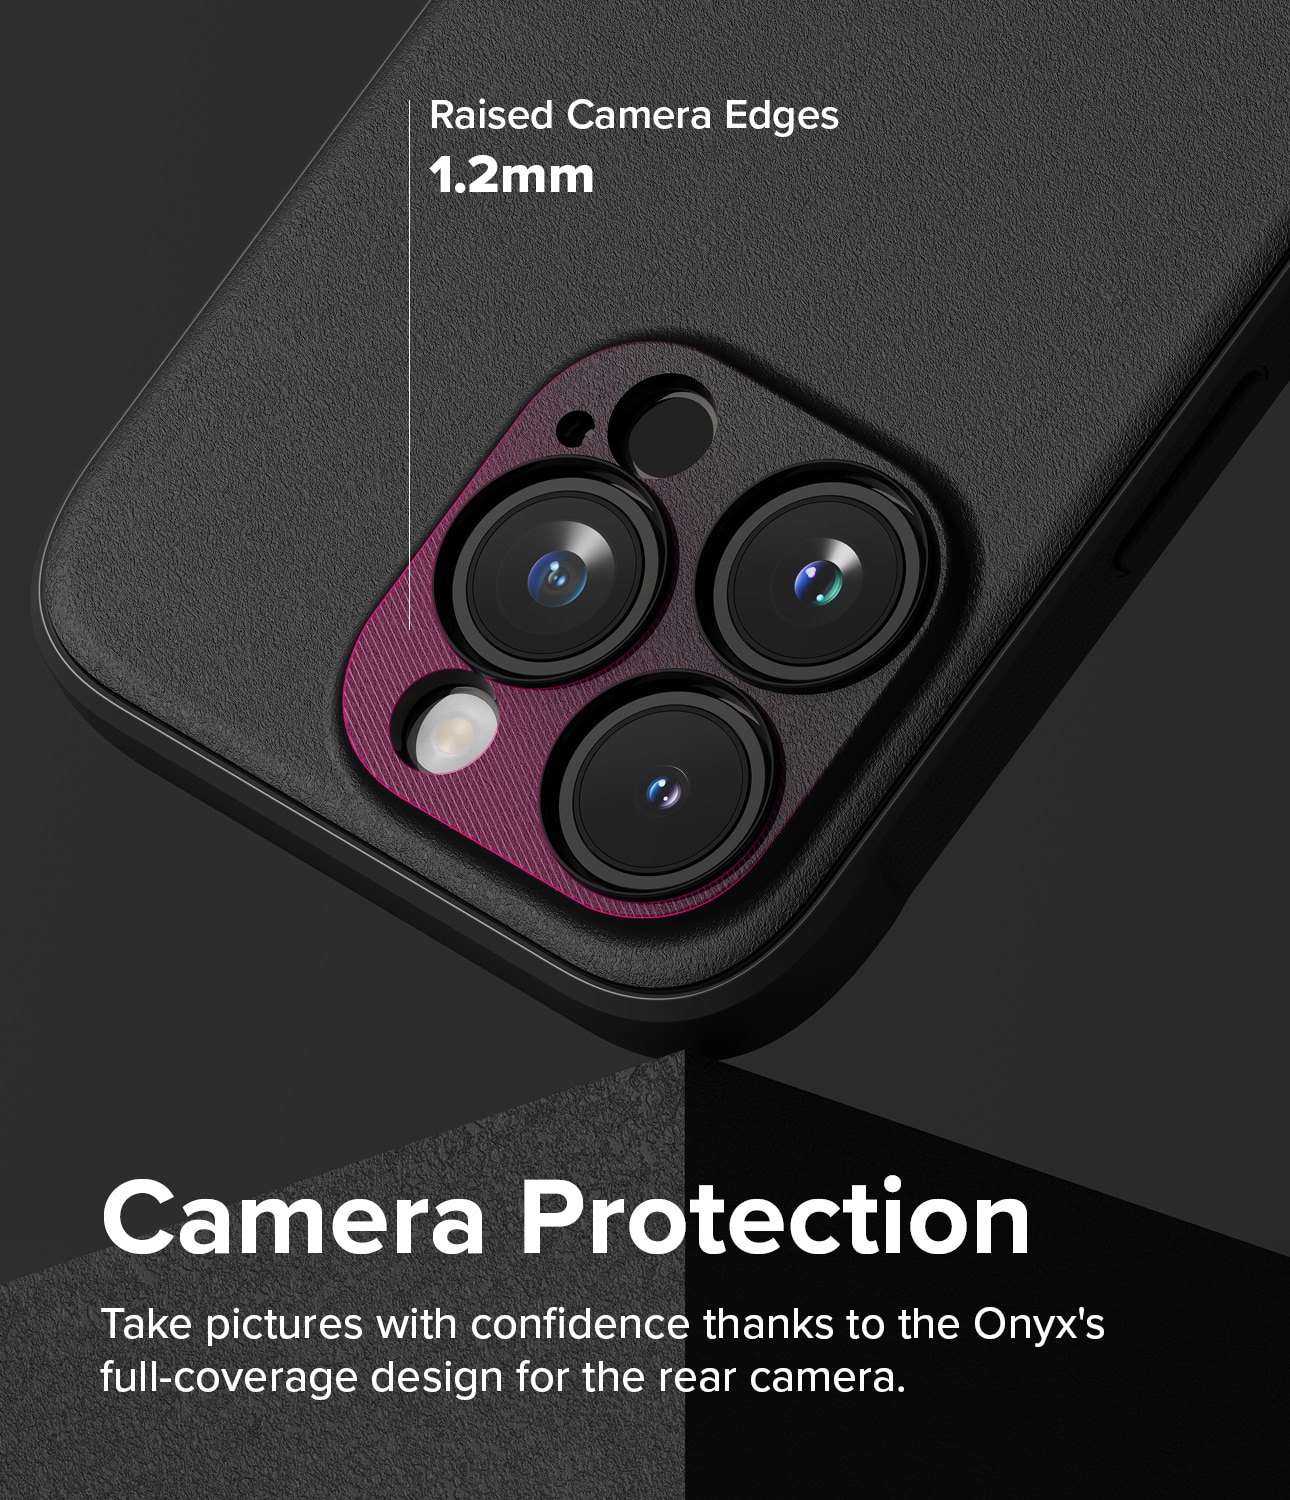 Funda Onyx Magnetic iPhone 15 Pro Max Black